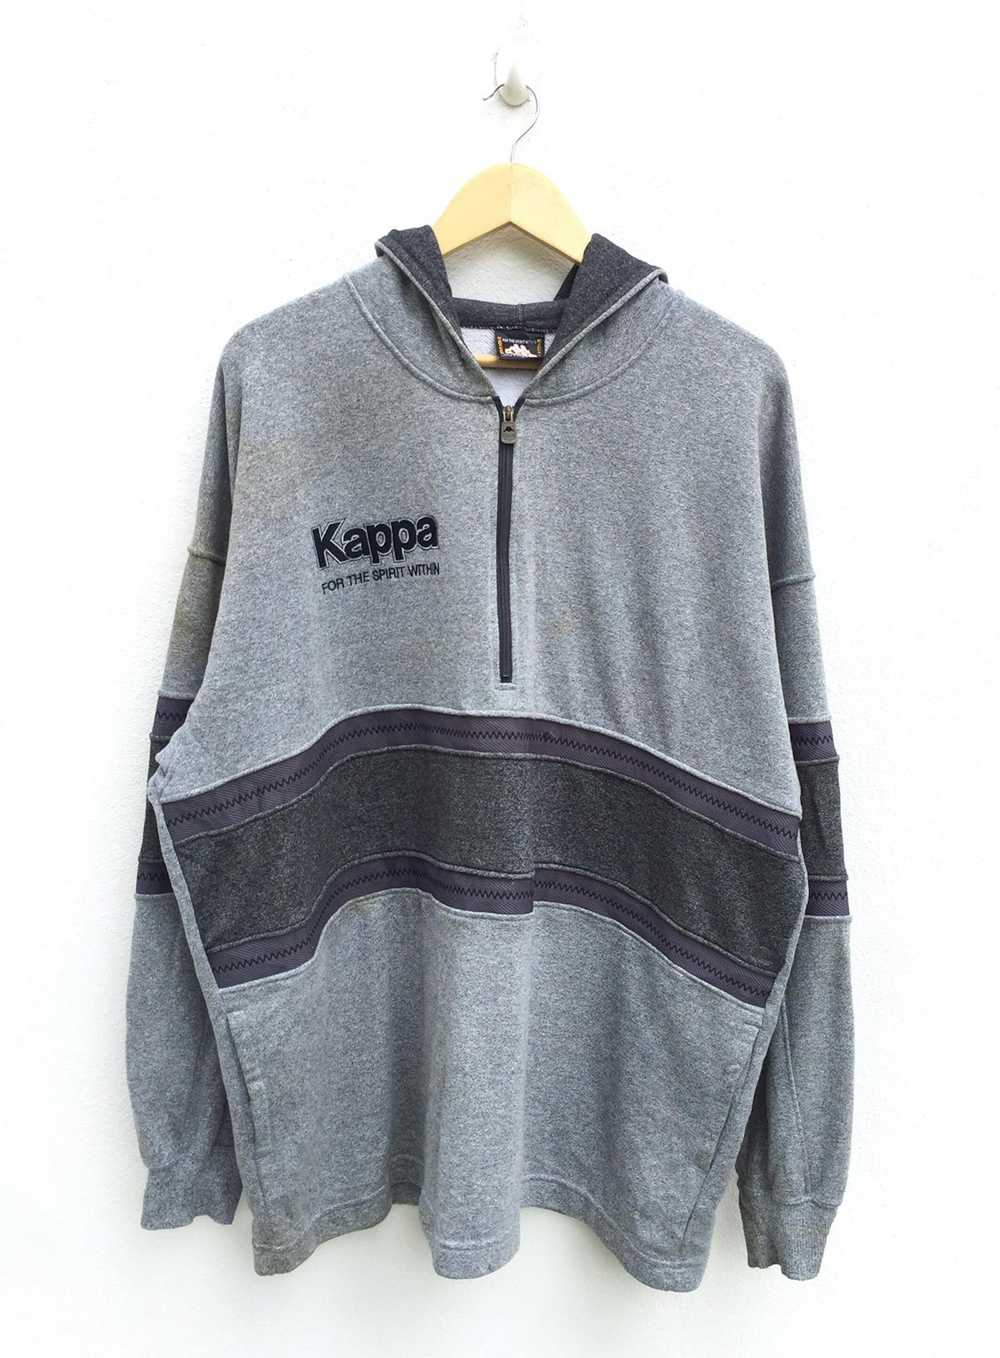 Kappa Kappa Hoodie Jacket Track Top Hip Hop Fashi… - image 1